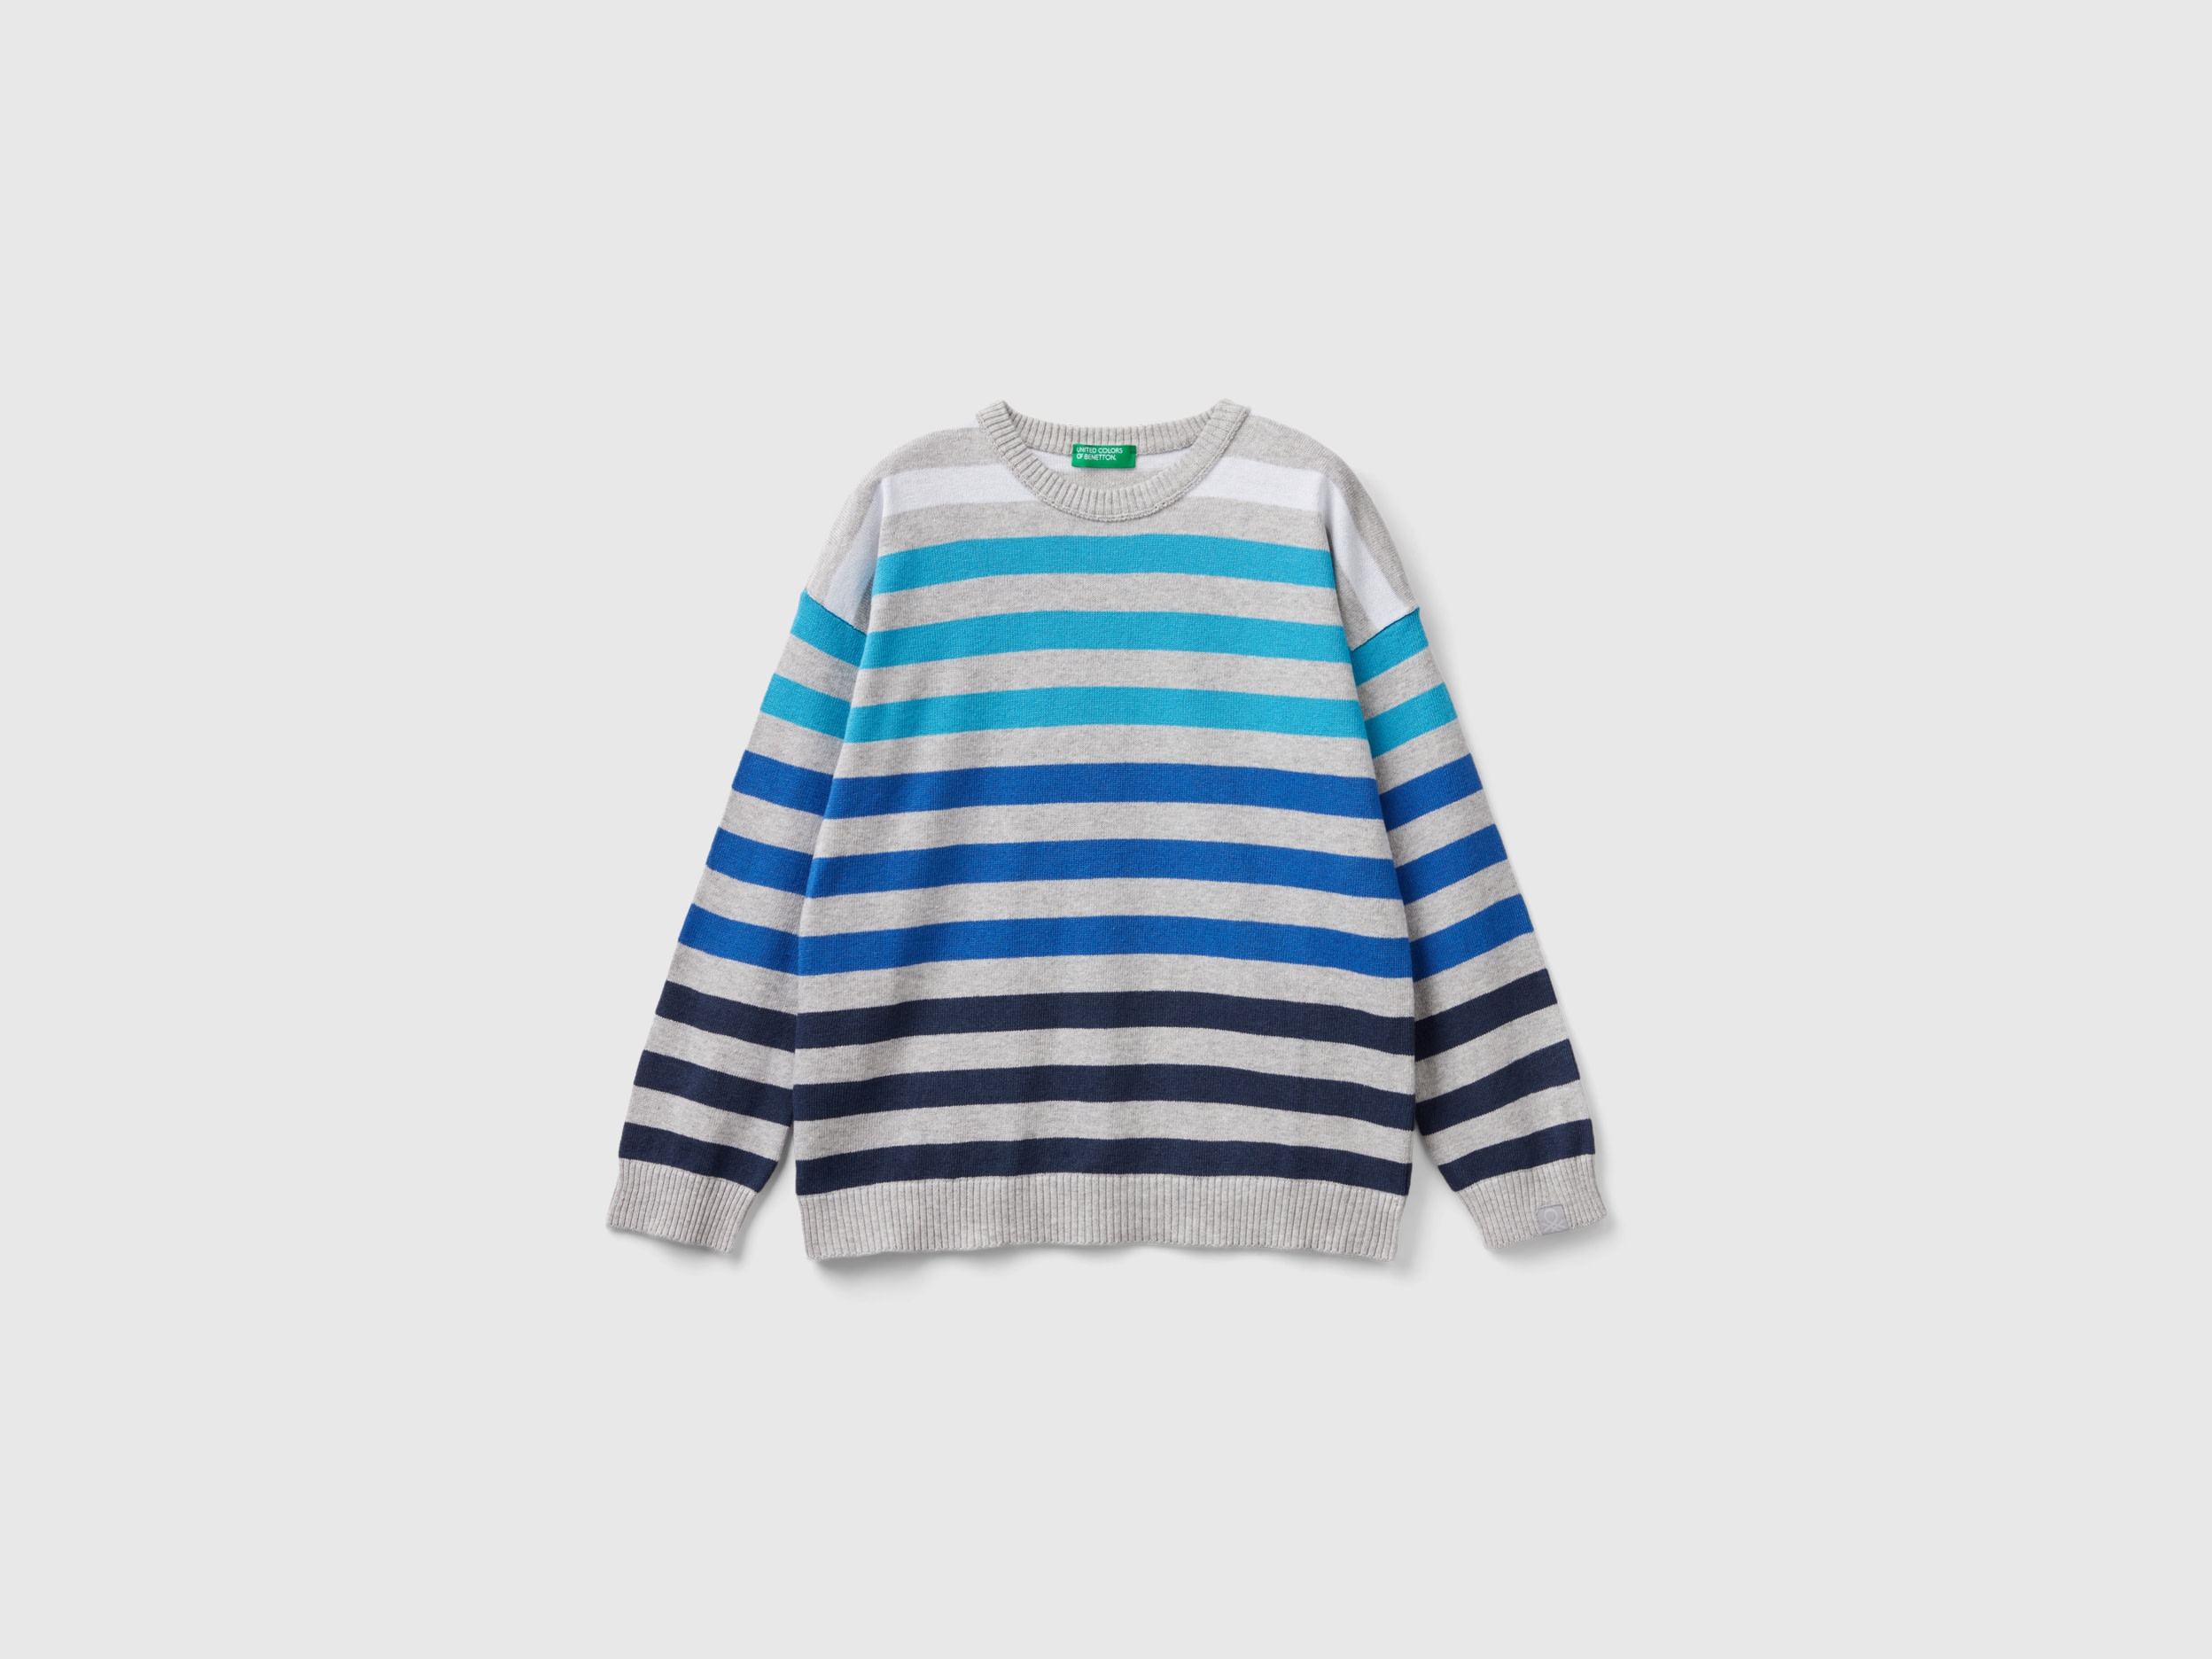 Image of Benetton, Striped Sweater, size 3XL, Light Gray, Kids